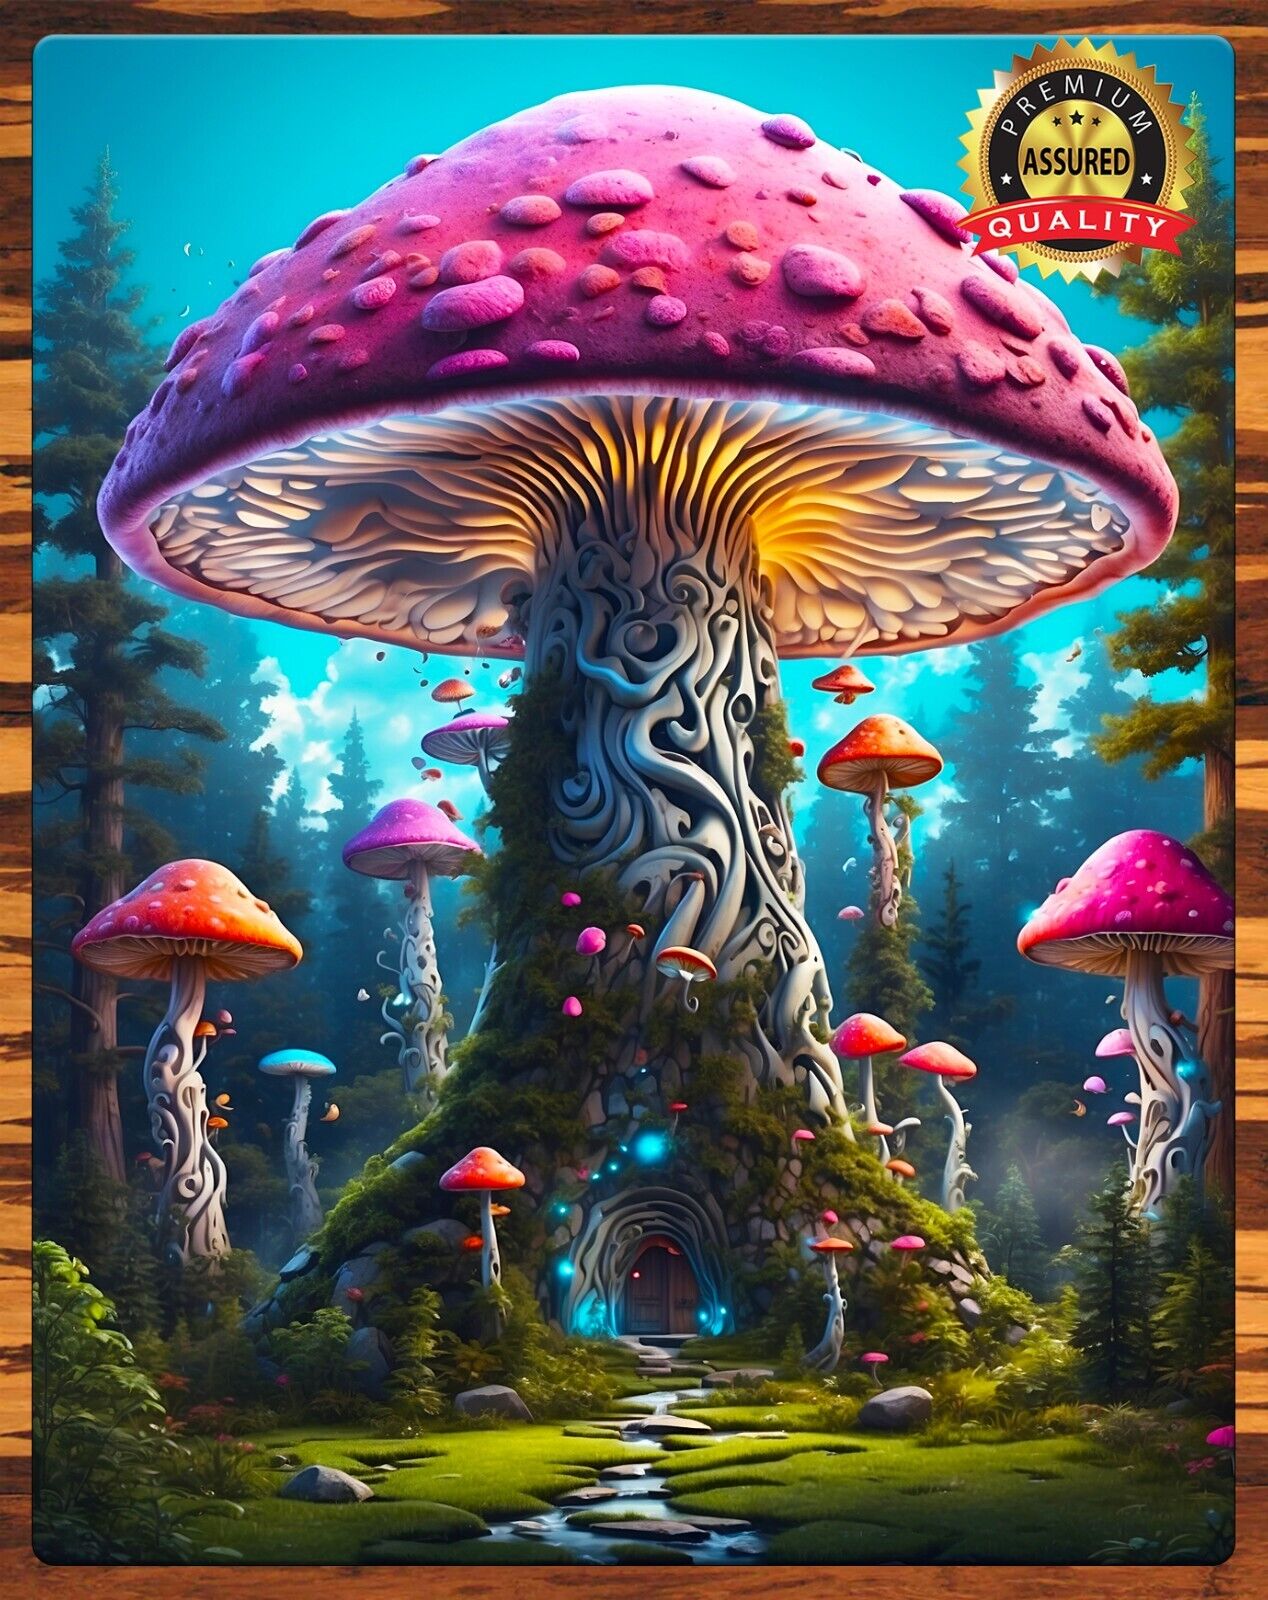 Magic Mushrooms - Psychedelic - 1970s - Metal Sign 11 x 14